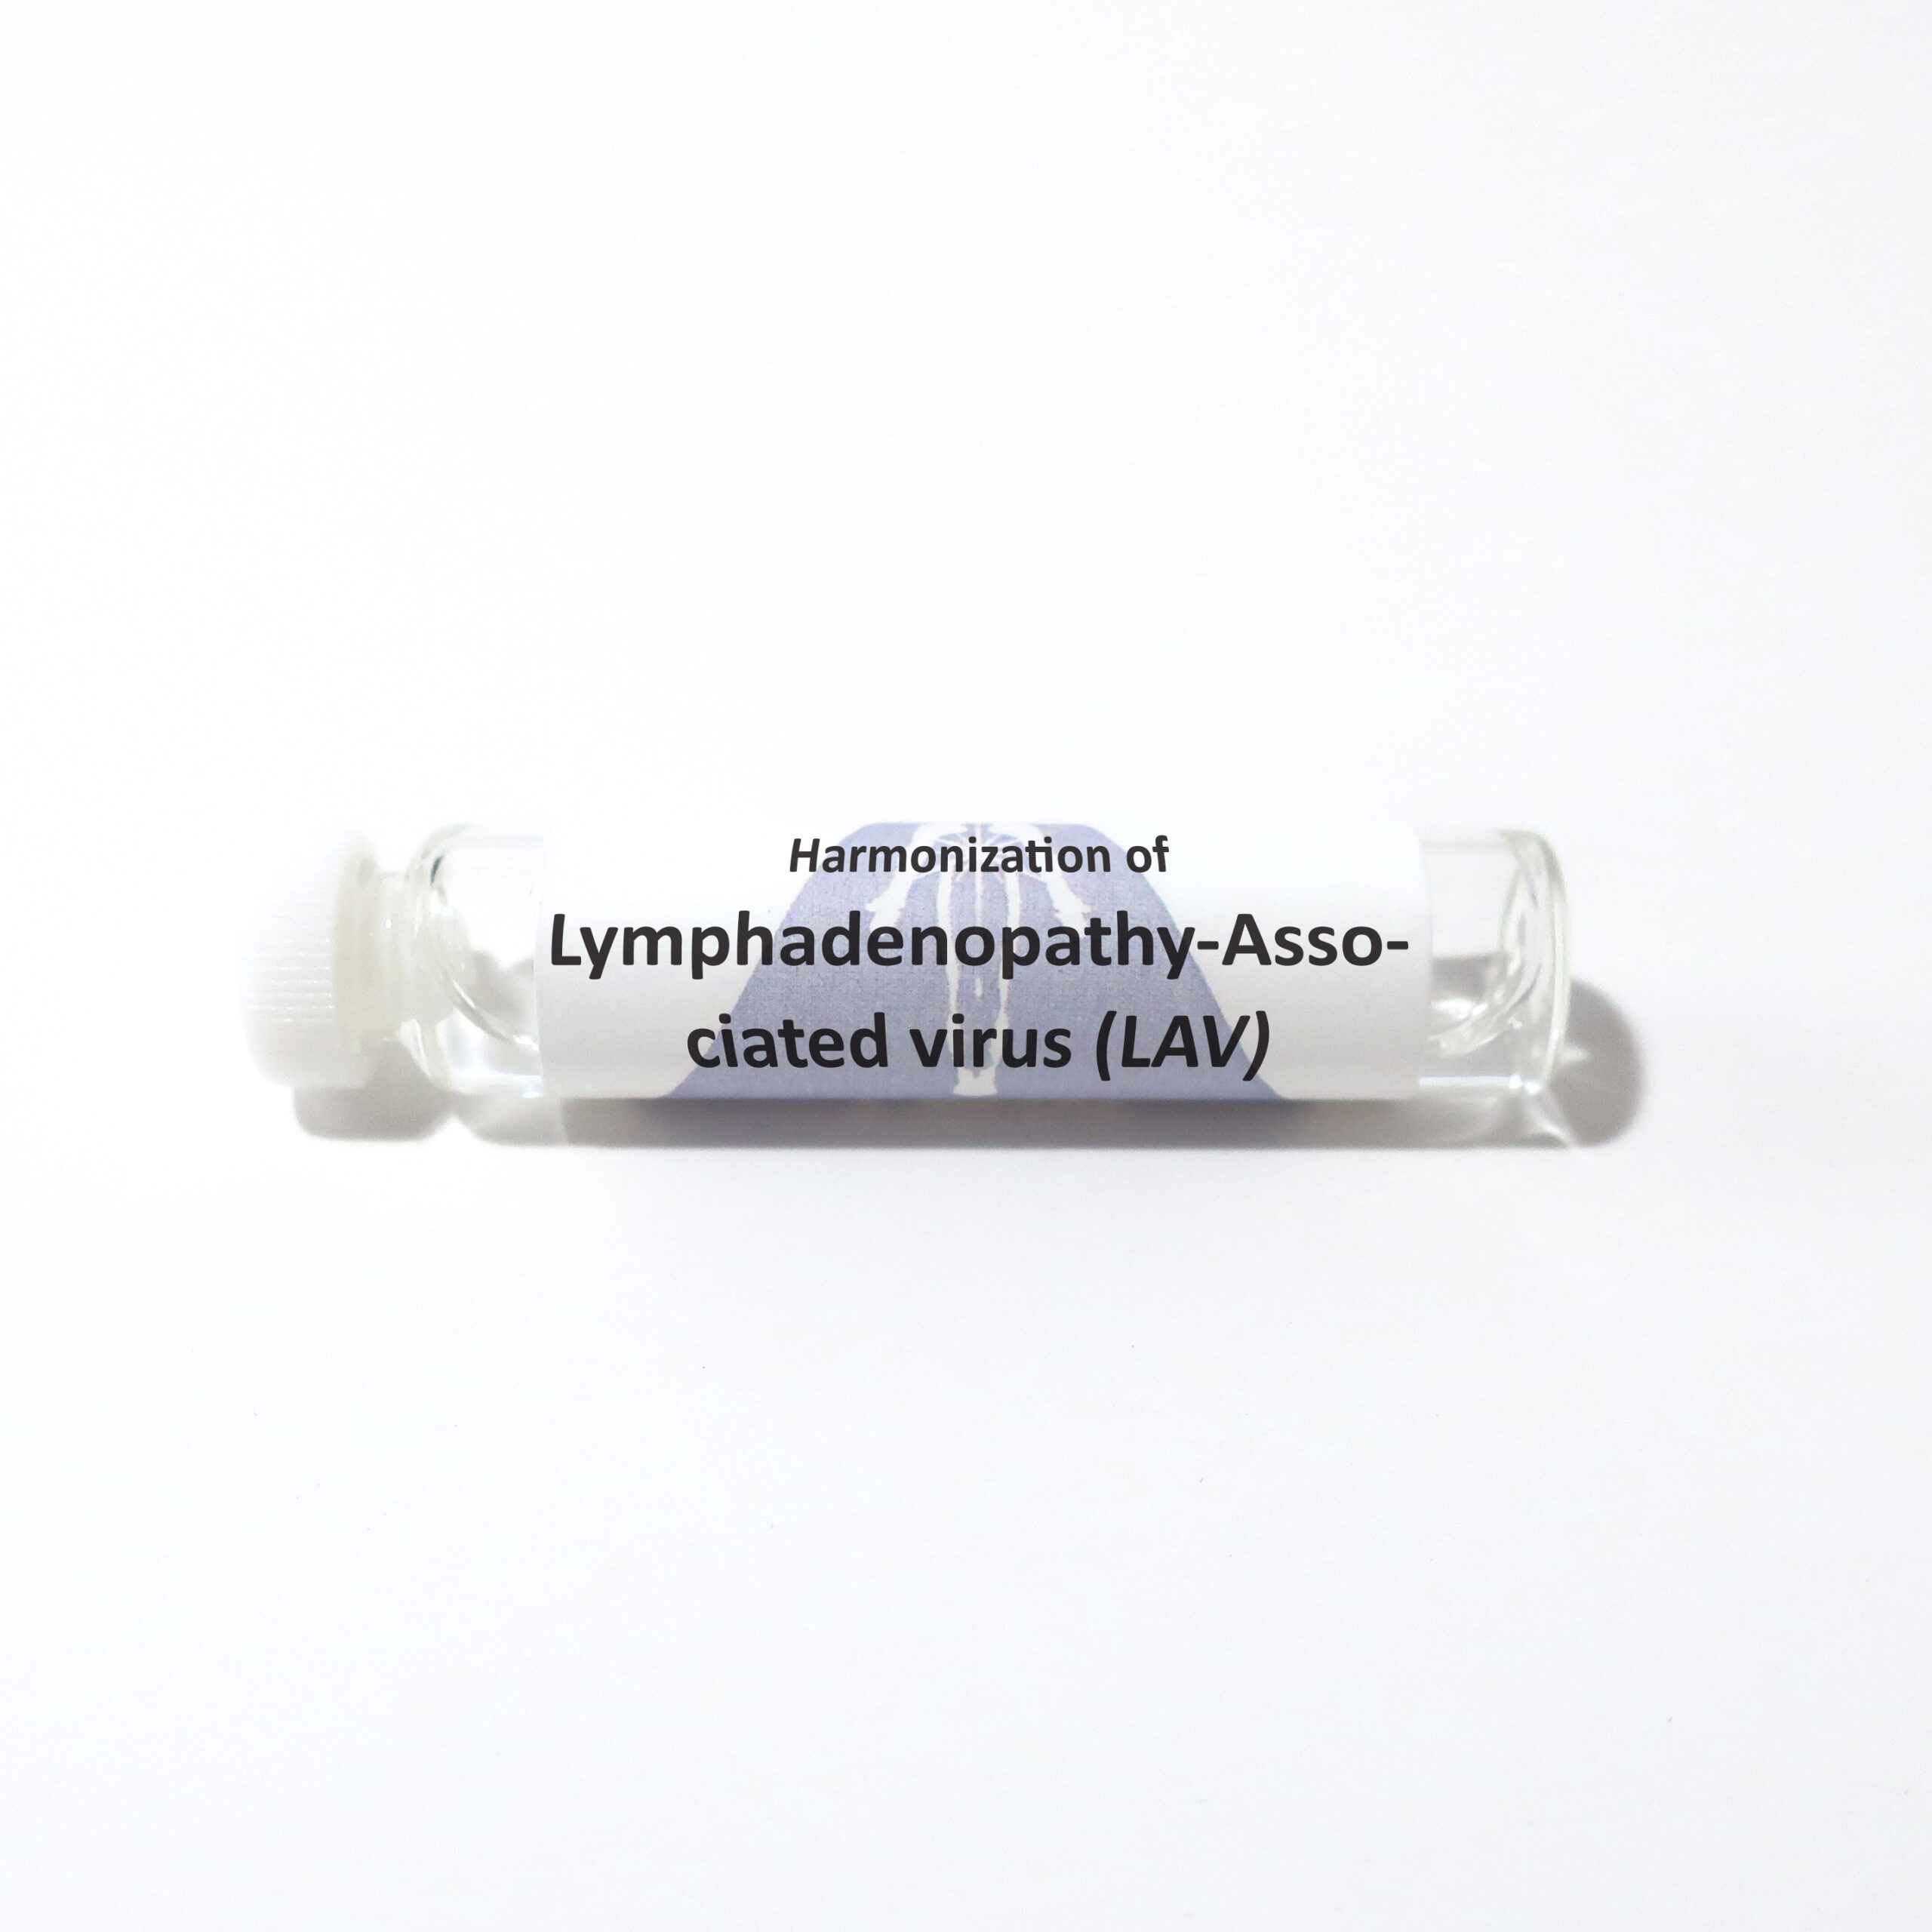 Lymphadenopathy-associated virus (LAV)